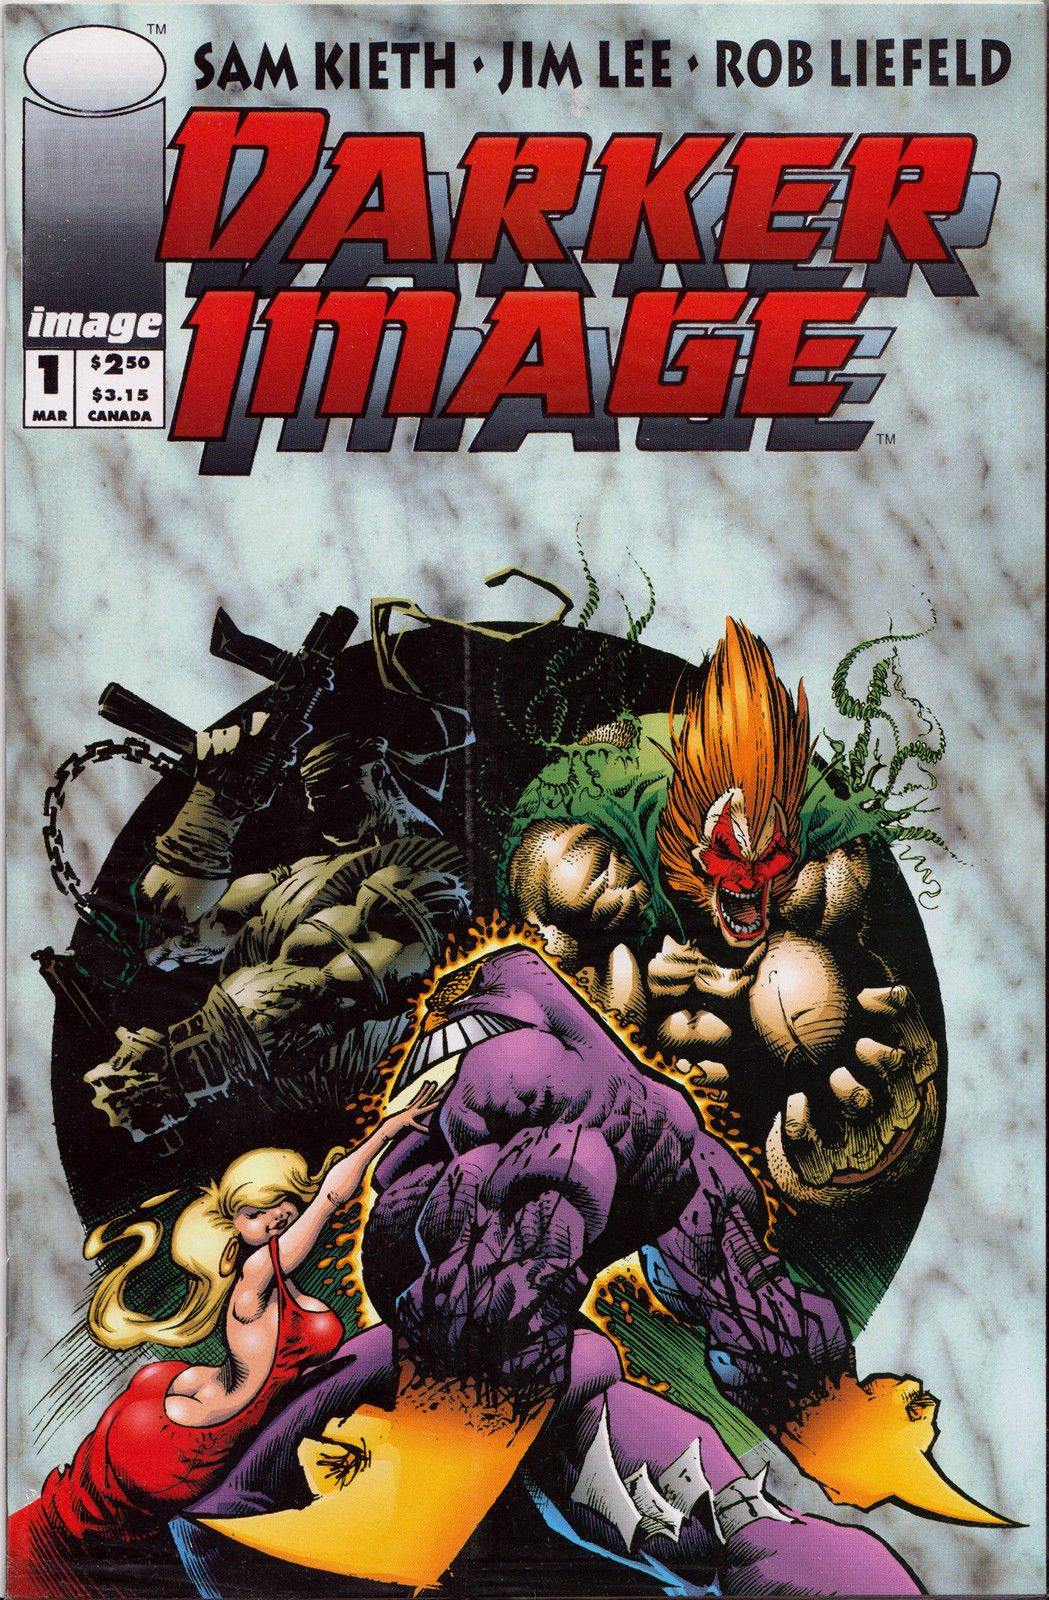 DARKER IMAGE #1 (Jim Lee/Rob Liefeld/Sam Keith Cover) ~ Image Comics